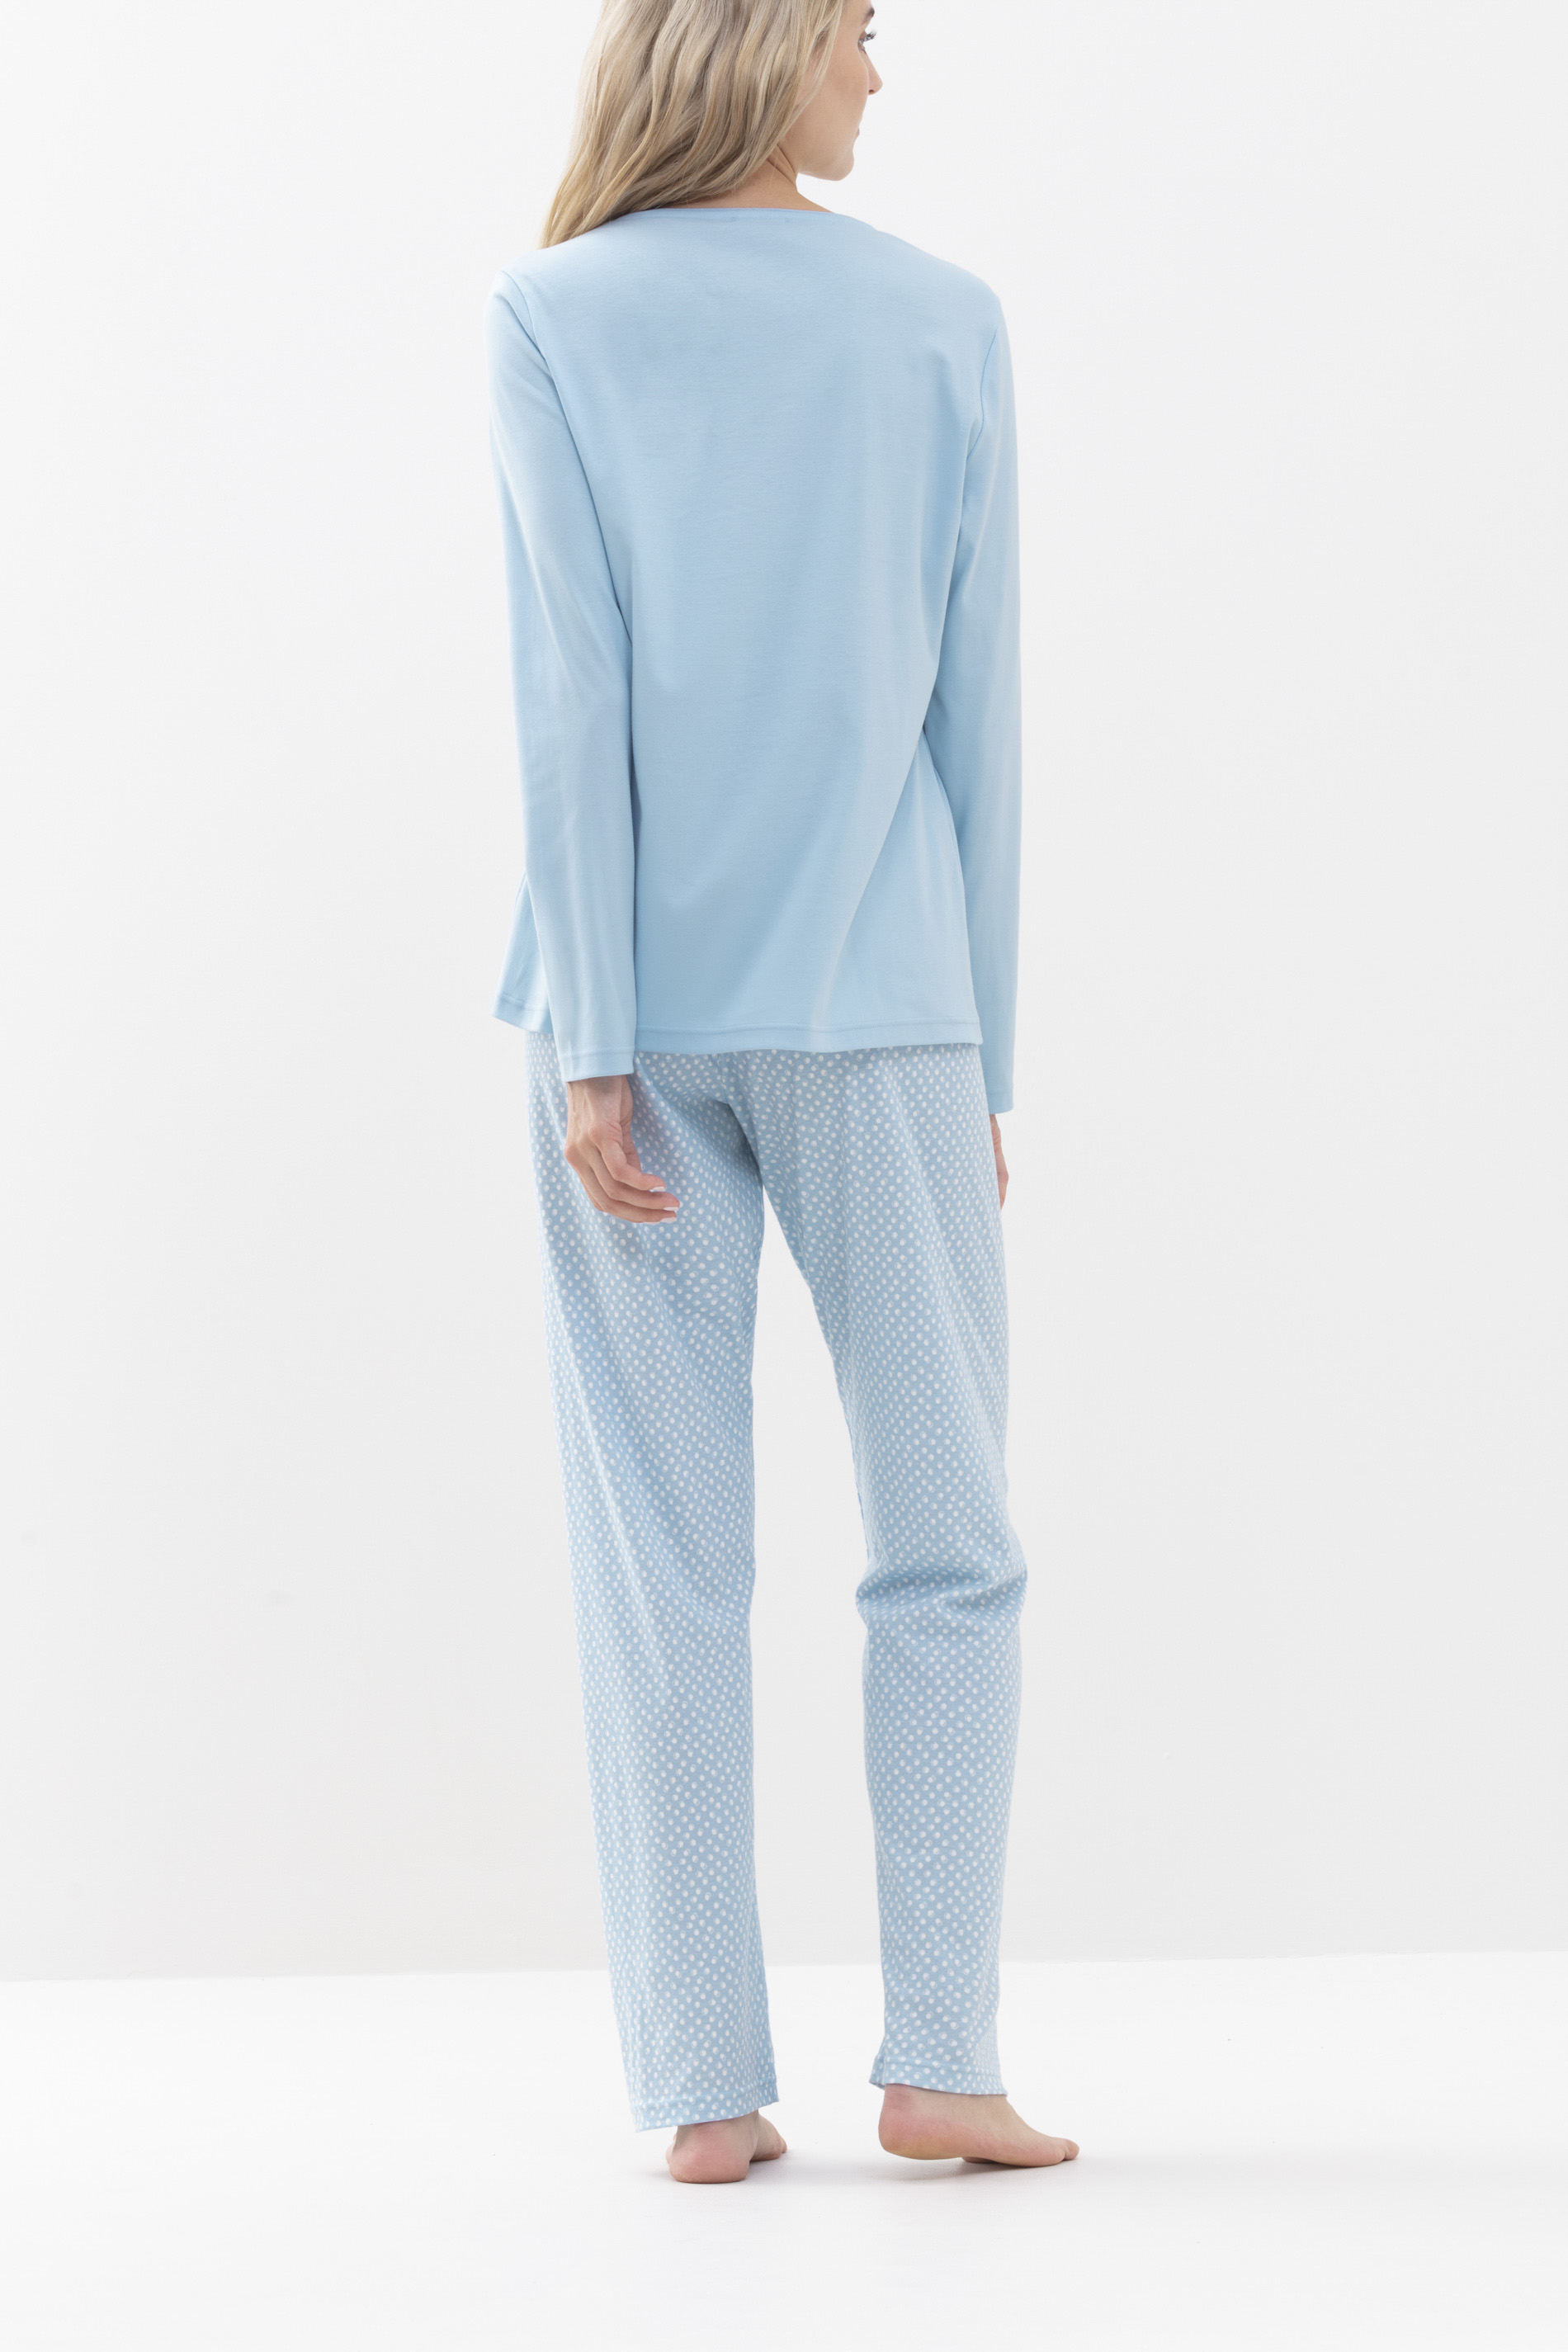 Pyjama Dream Blue Serie Emelie Achteraanzicht | mey®